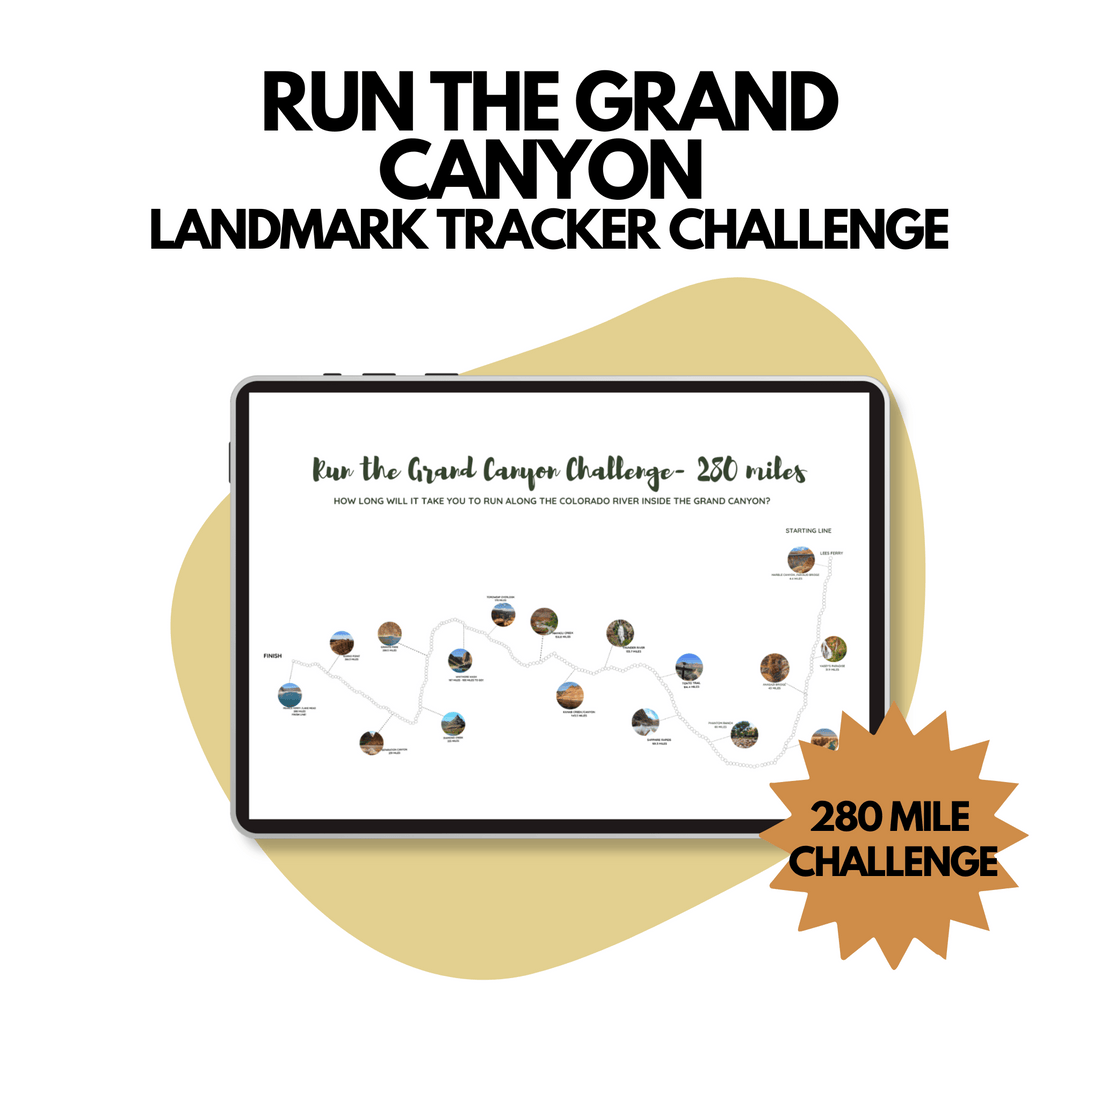 Run the Grand Canyon Landmark Tracker Challenge